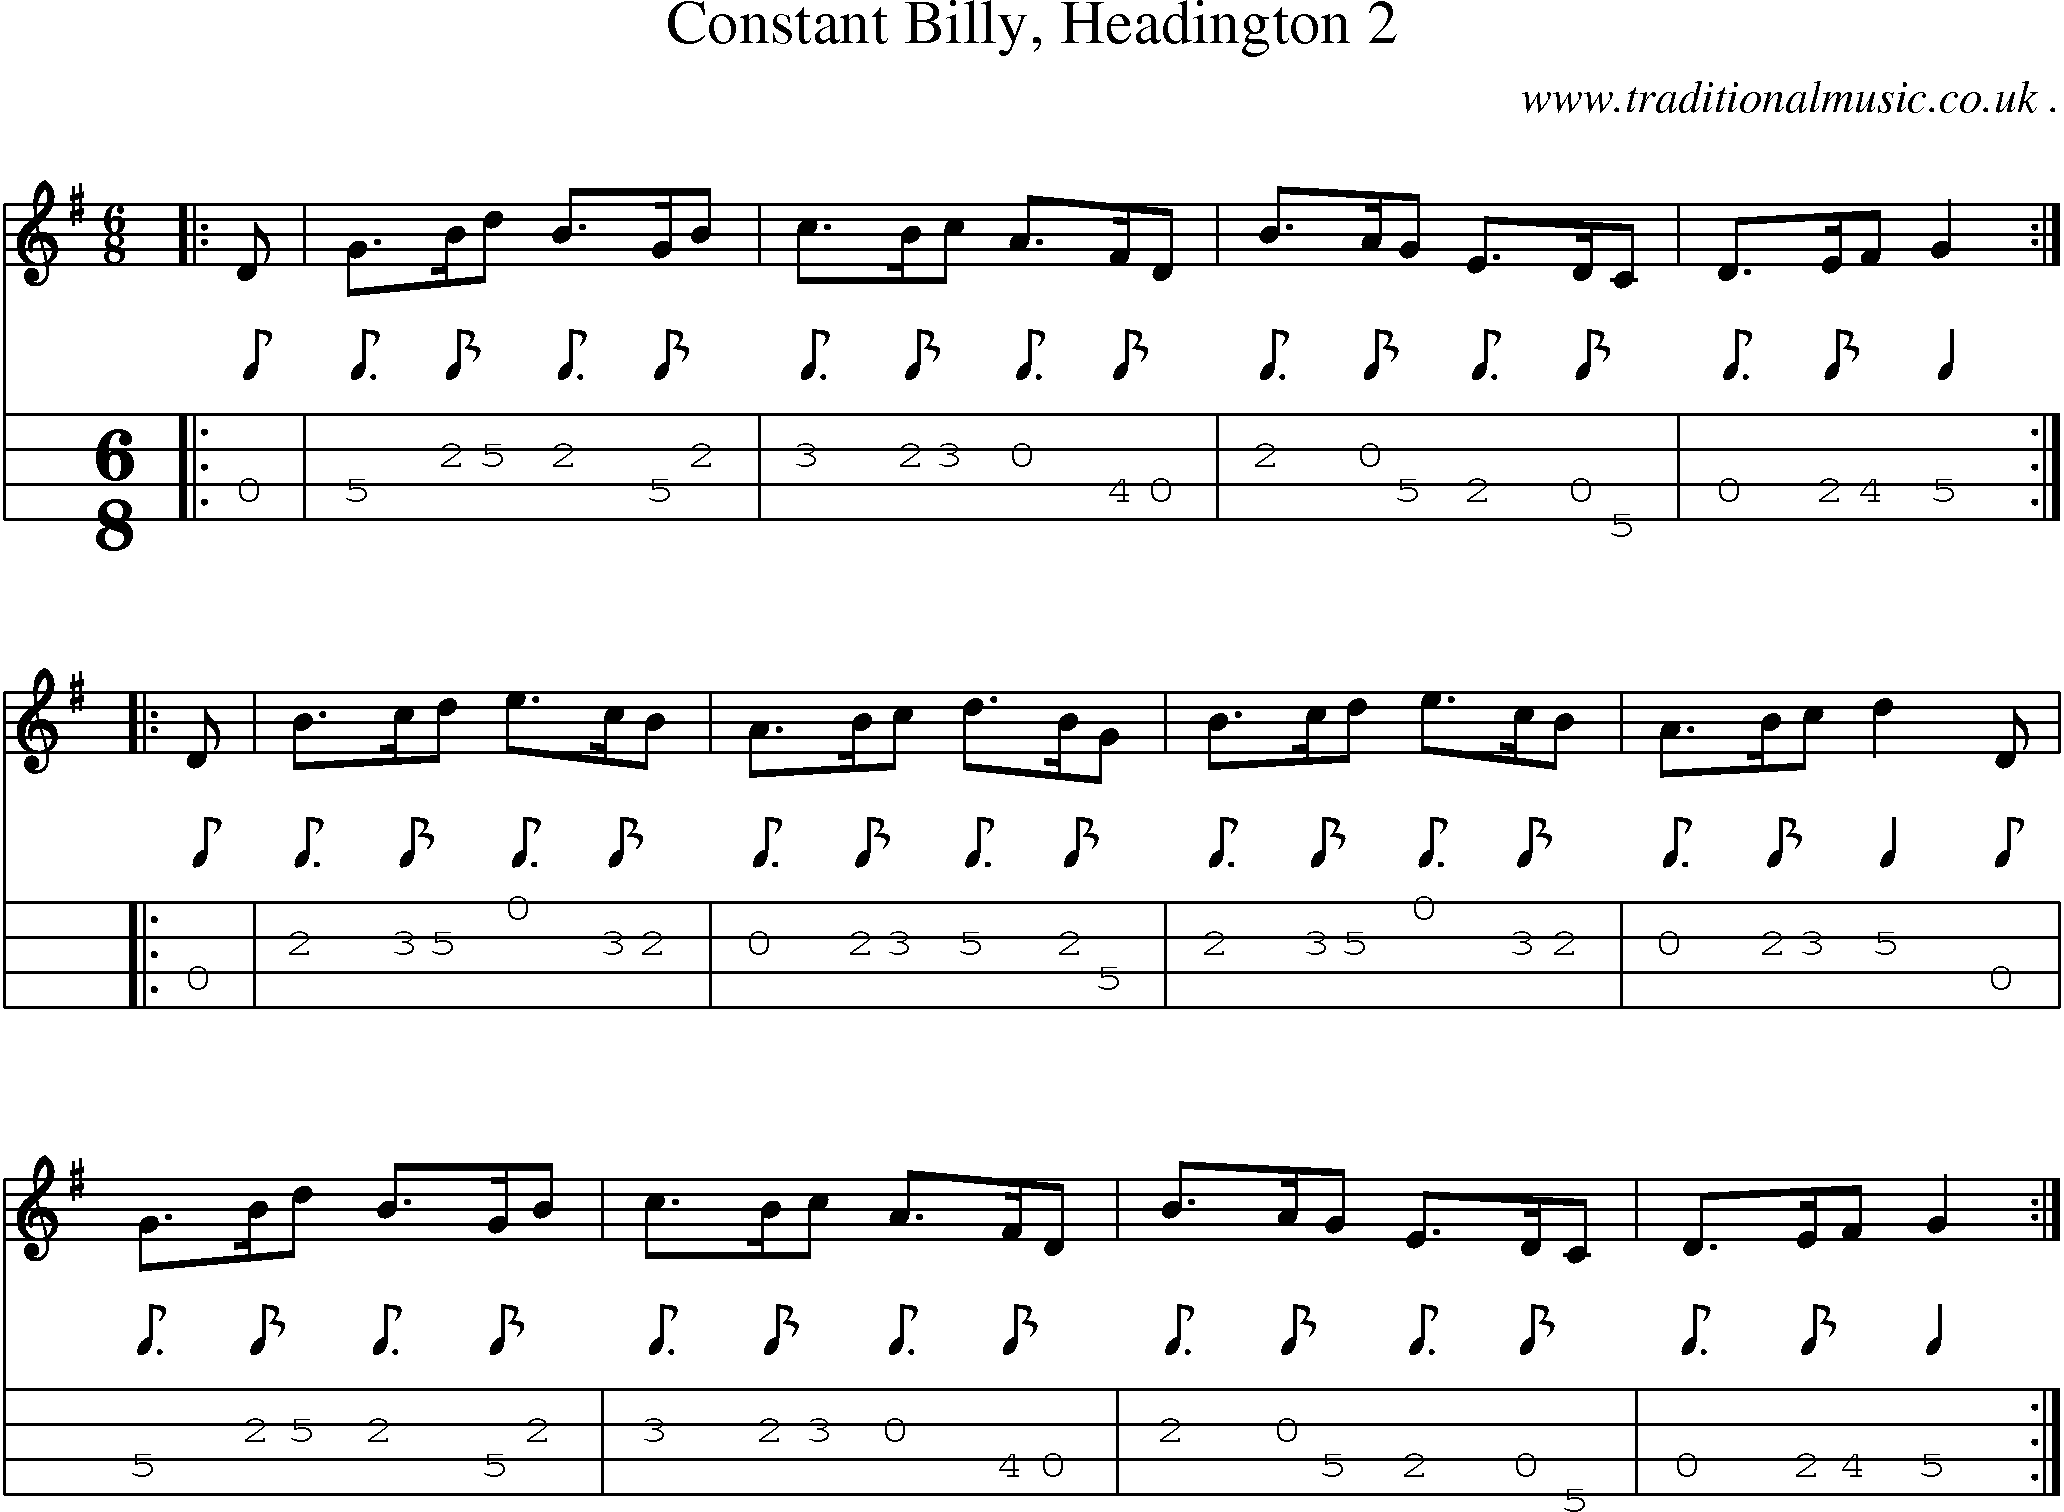 Sheet-Music and Mandolin Tabs for Constant Billy Headington 2